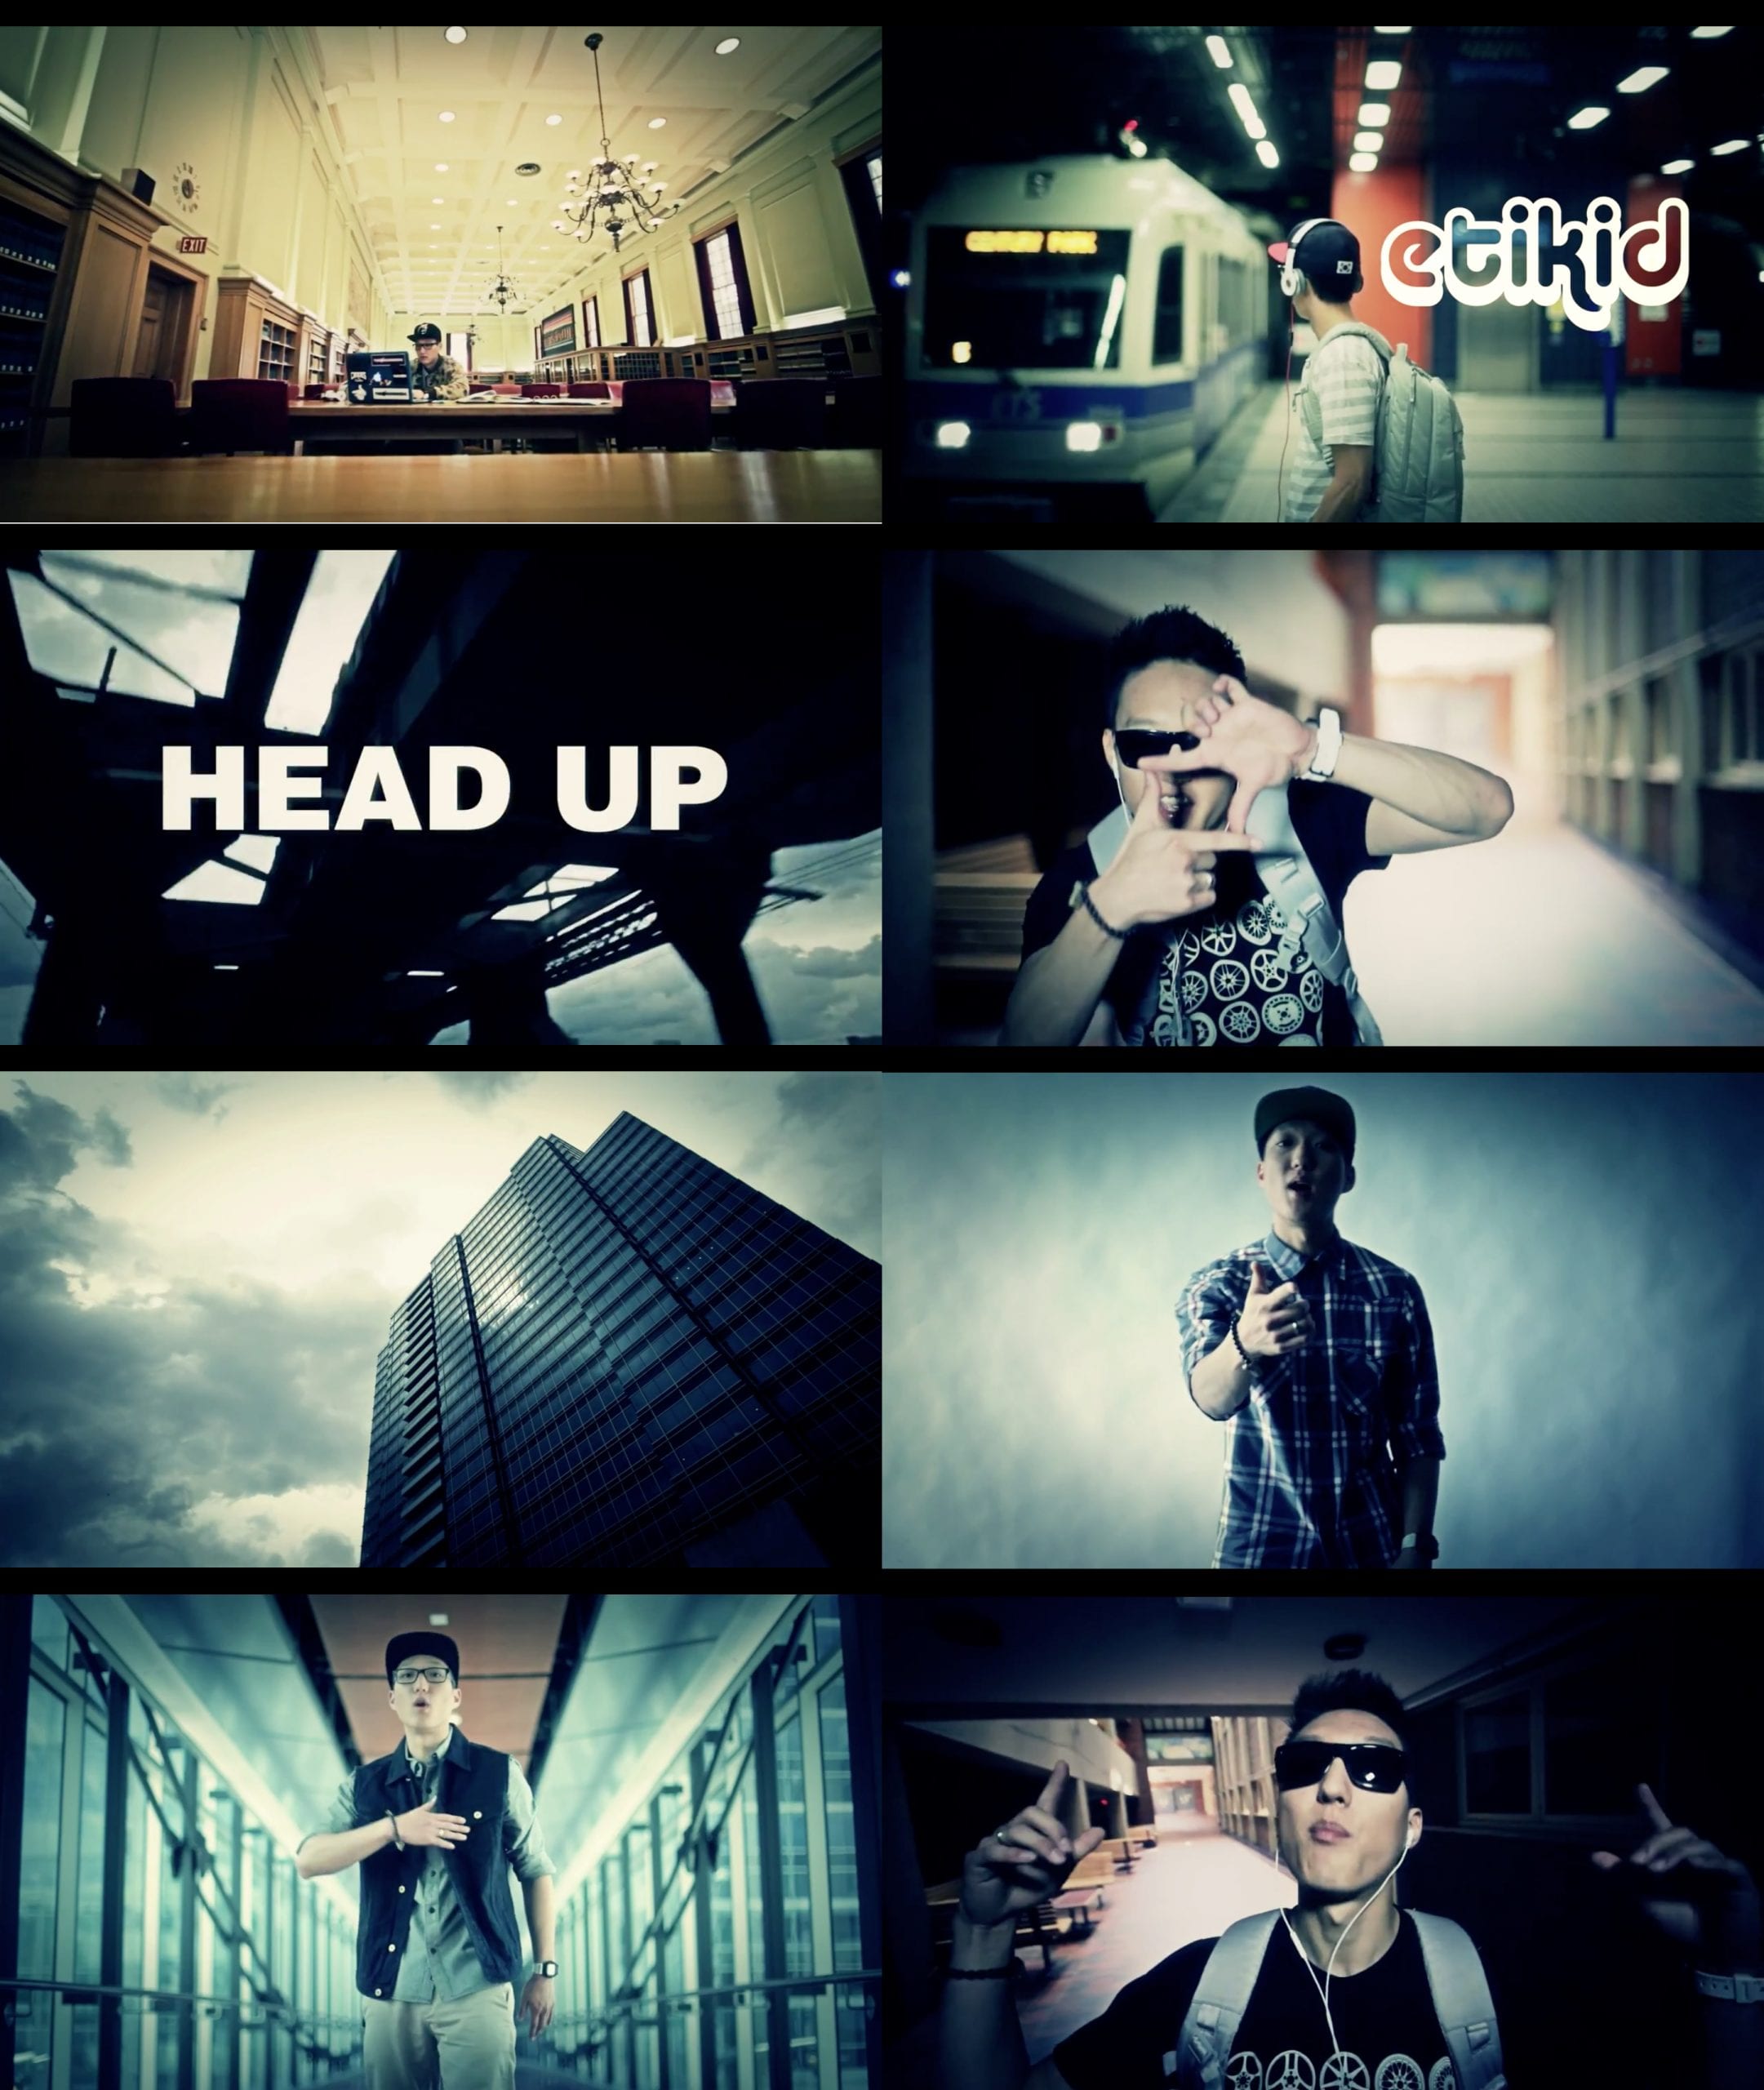 etikid - Head Up MV screenshots